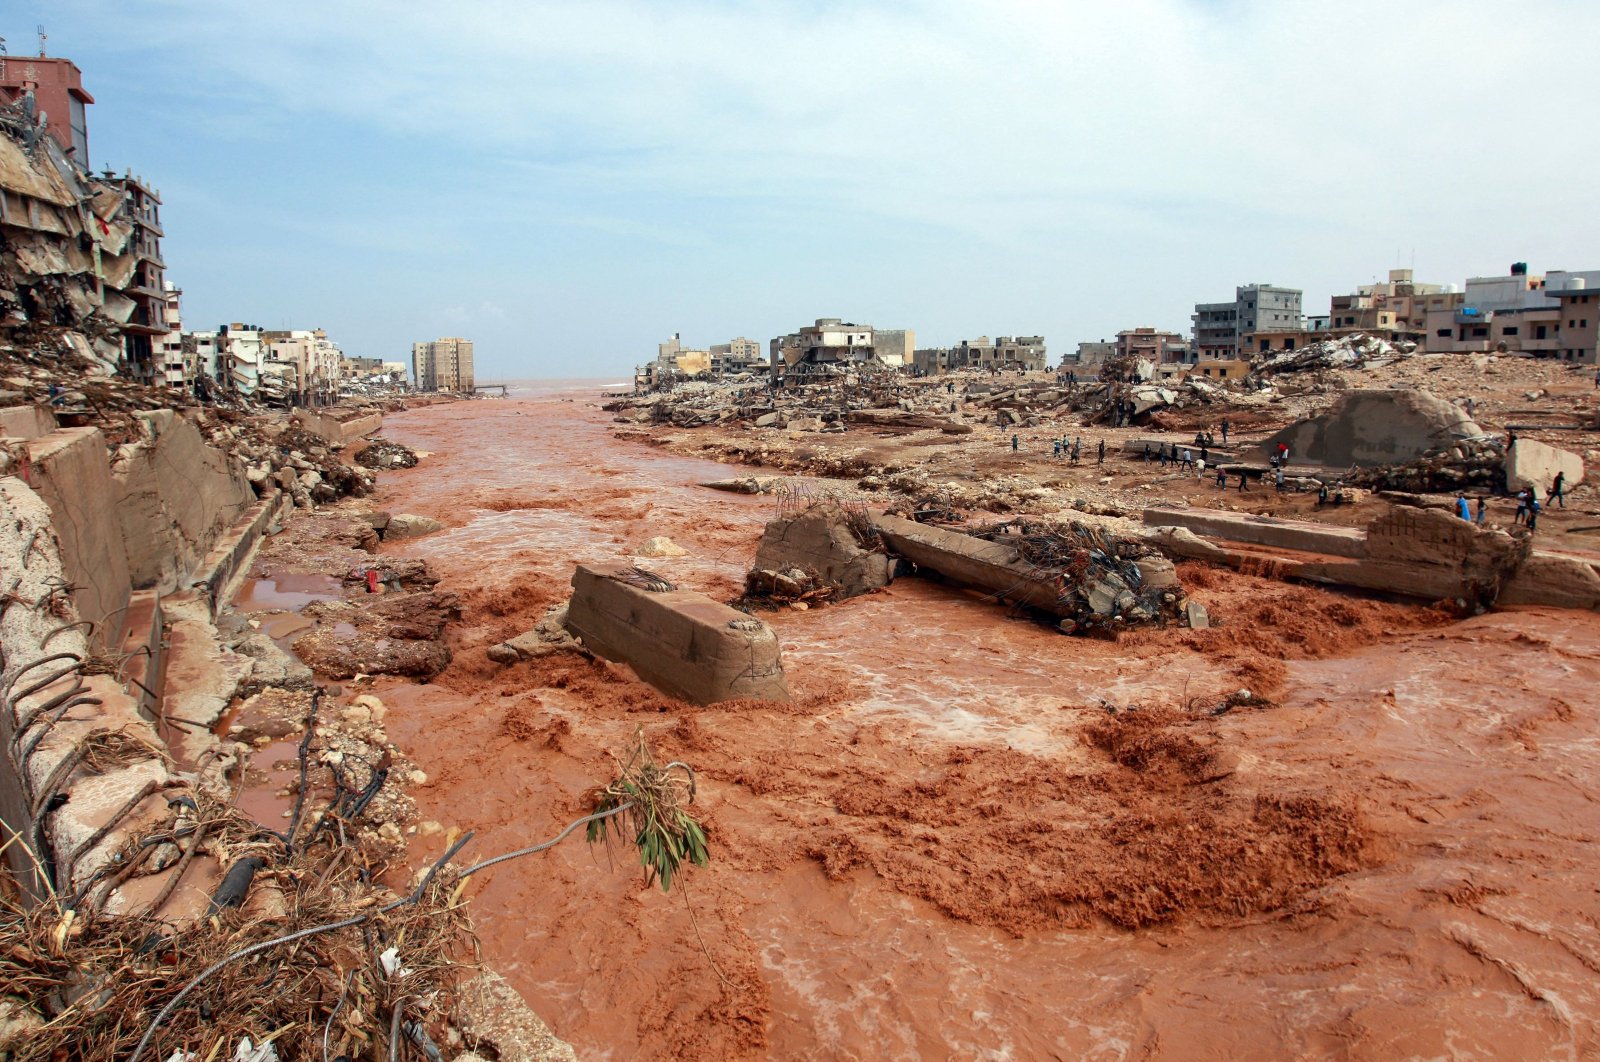 Türkiye voices solidarity with flood-hit Libya, sends emergency aid